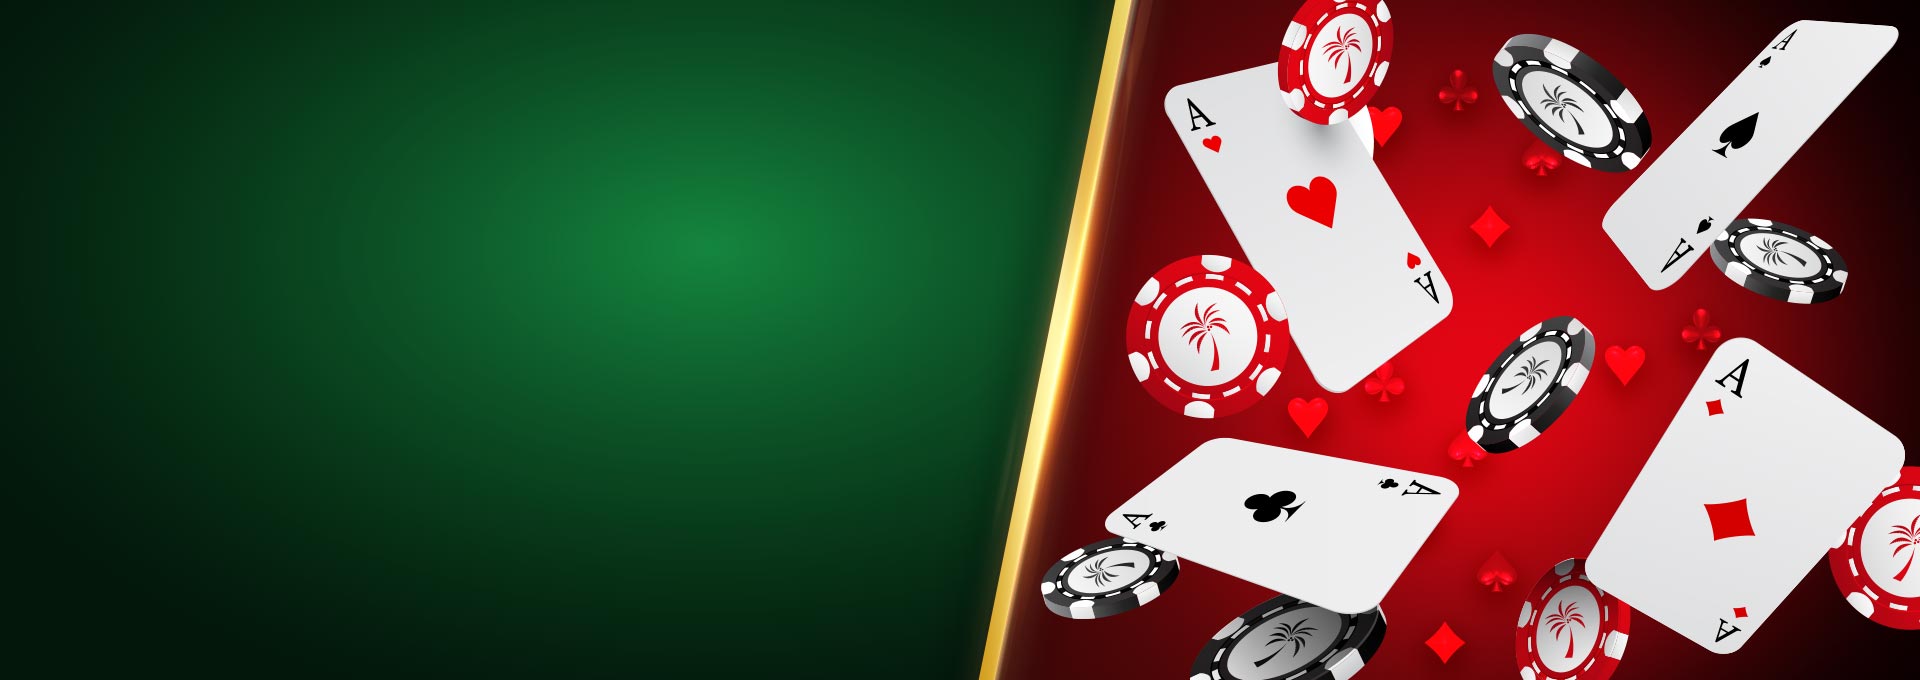 888 casino bônus slot